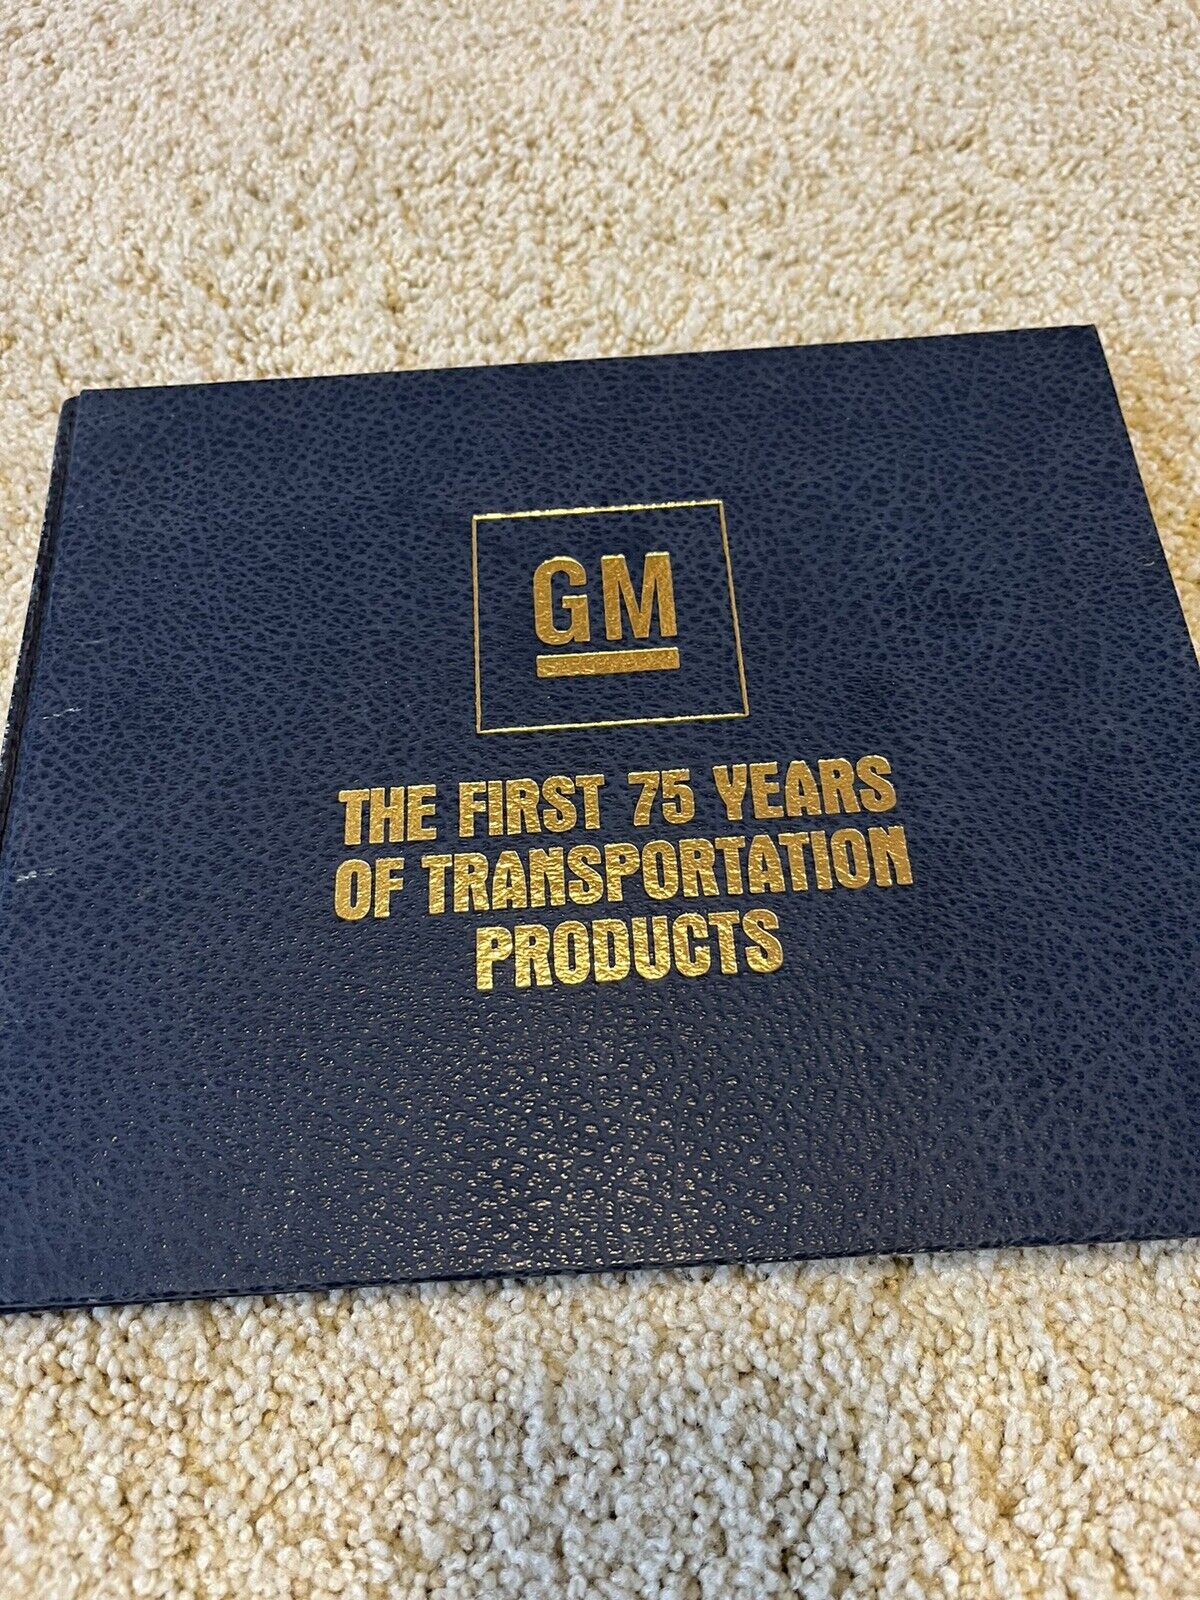 1983 GM 75th ANNIVERSARY Coffee Table book and GTP Corvette Brochure